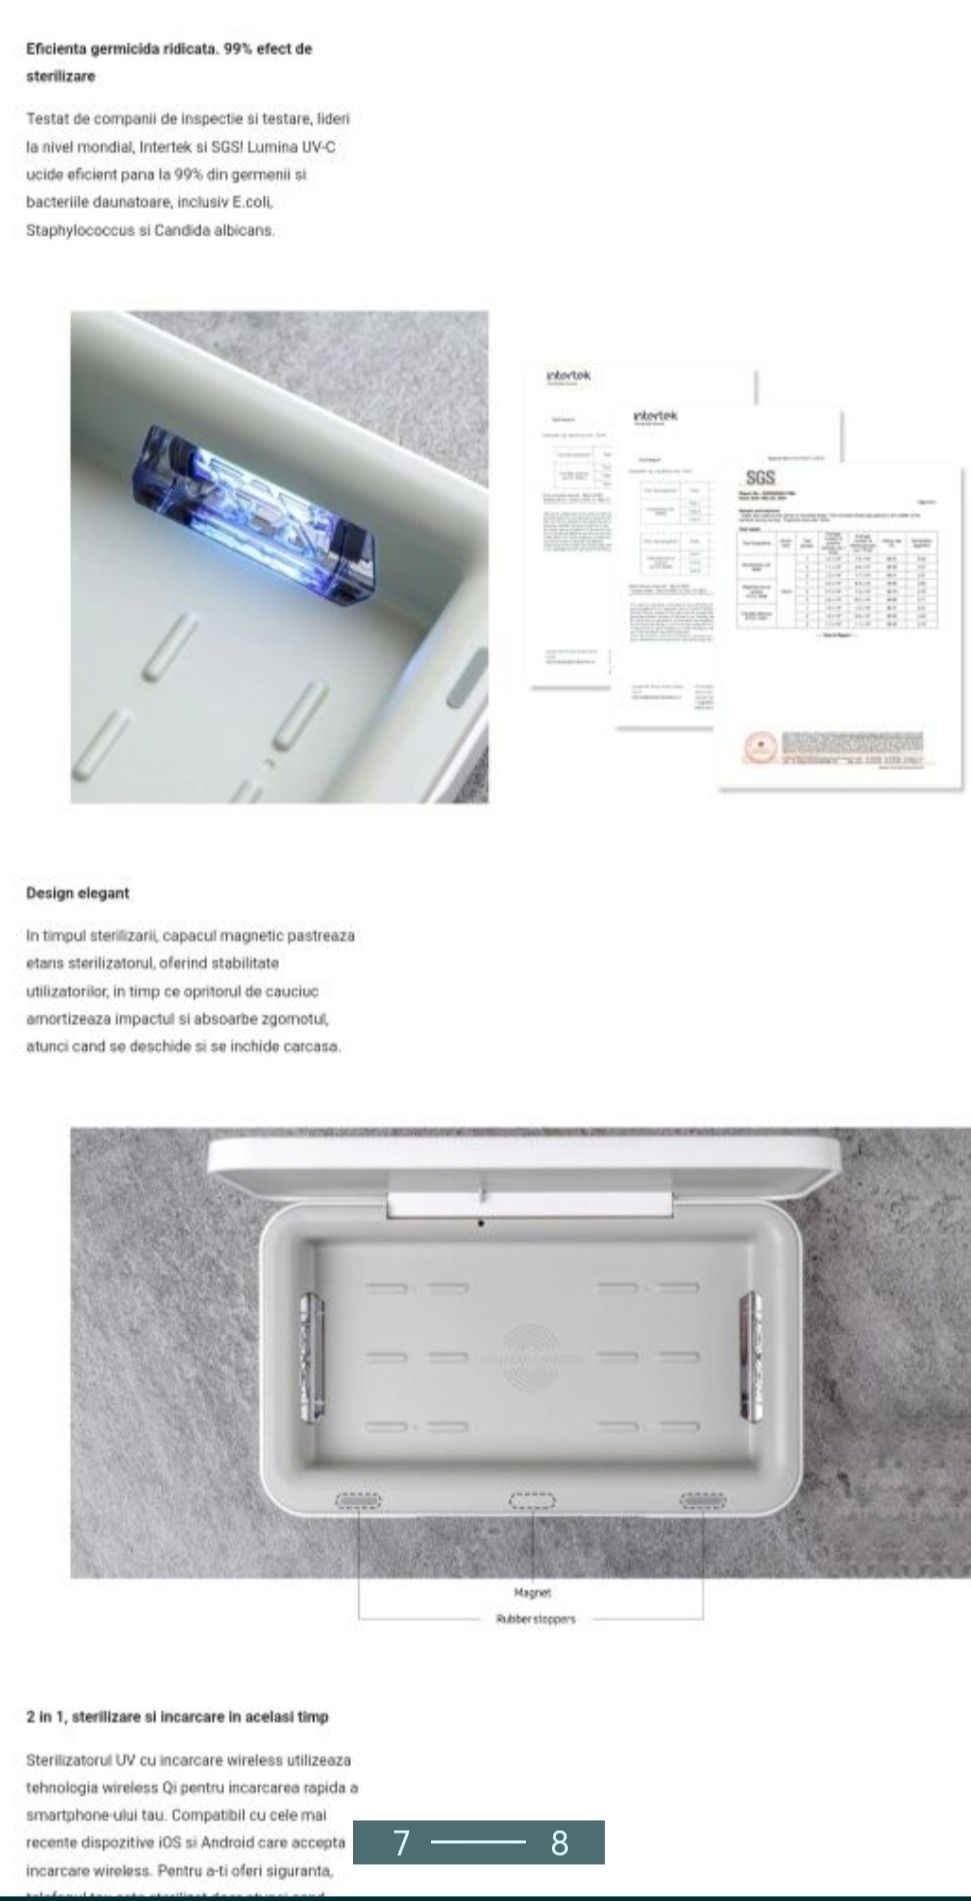 Vand sterilizator original Samsung UV ITFIT cu incarcare wireless, Alb